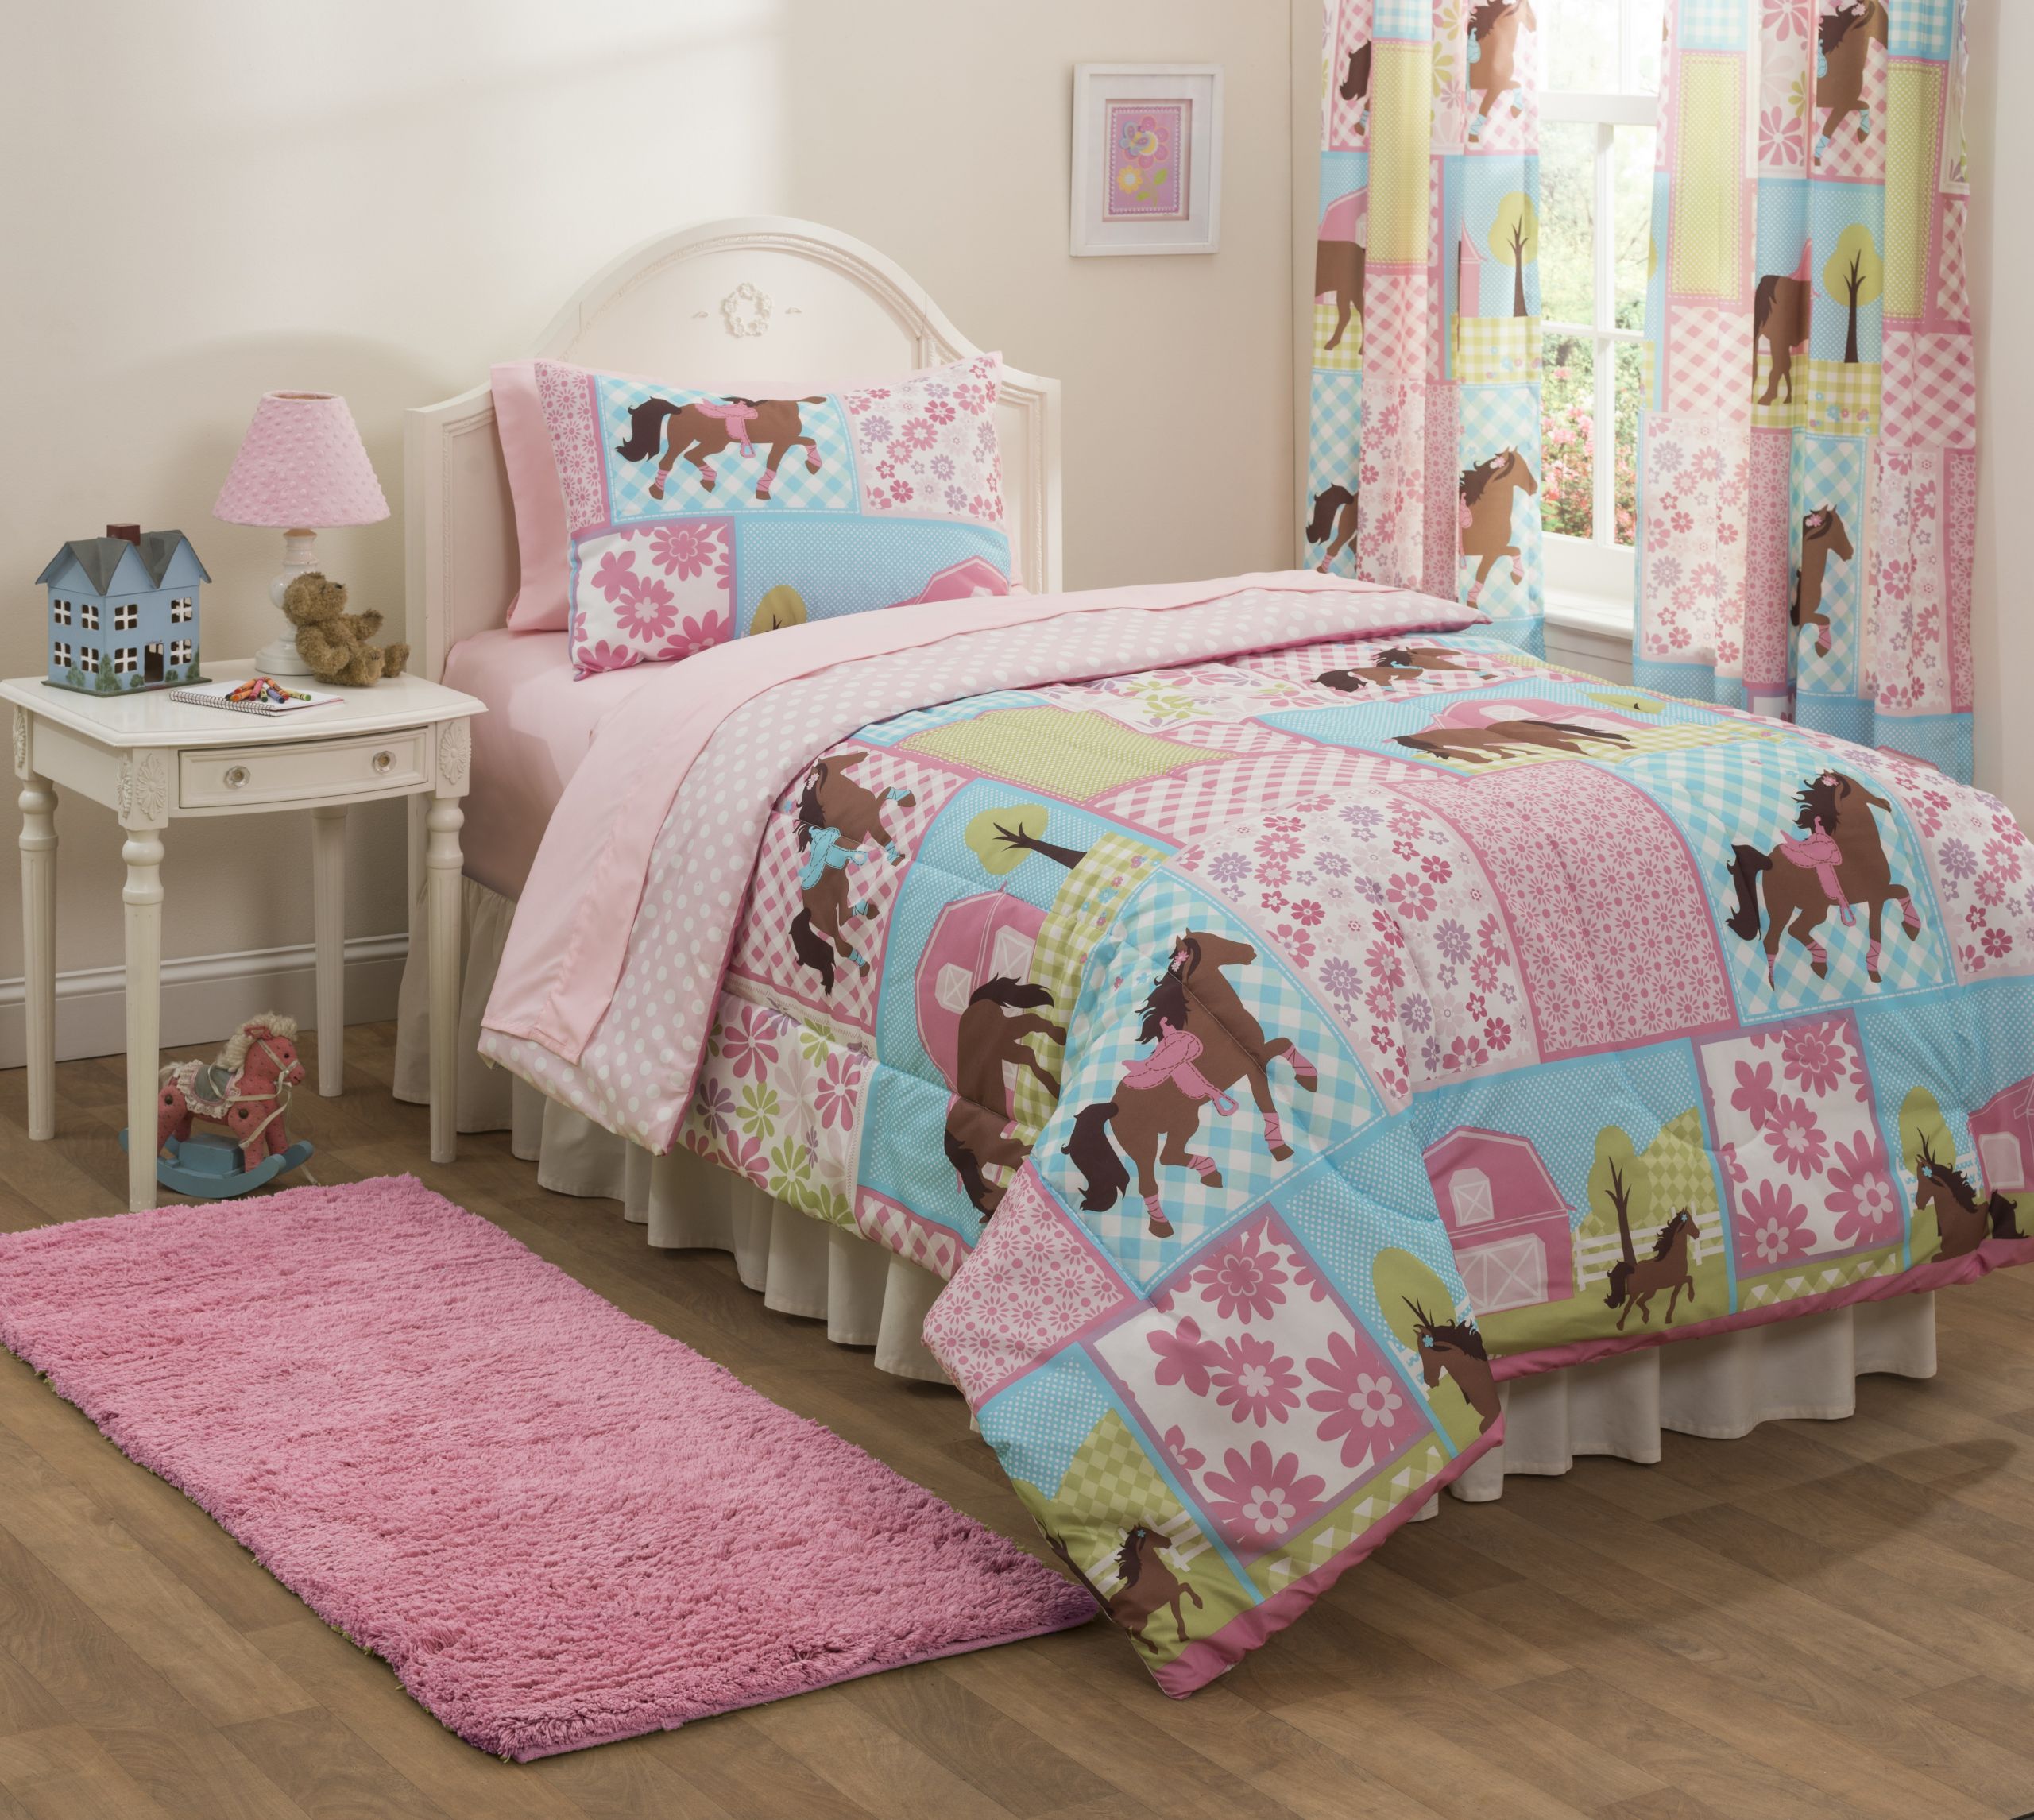 Walmart Bedroom Sets For Kids
 Heritage Kids Country Meadows Bed in a Bag Bedding Set